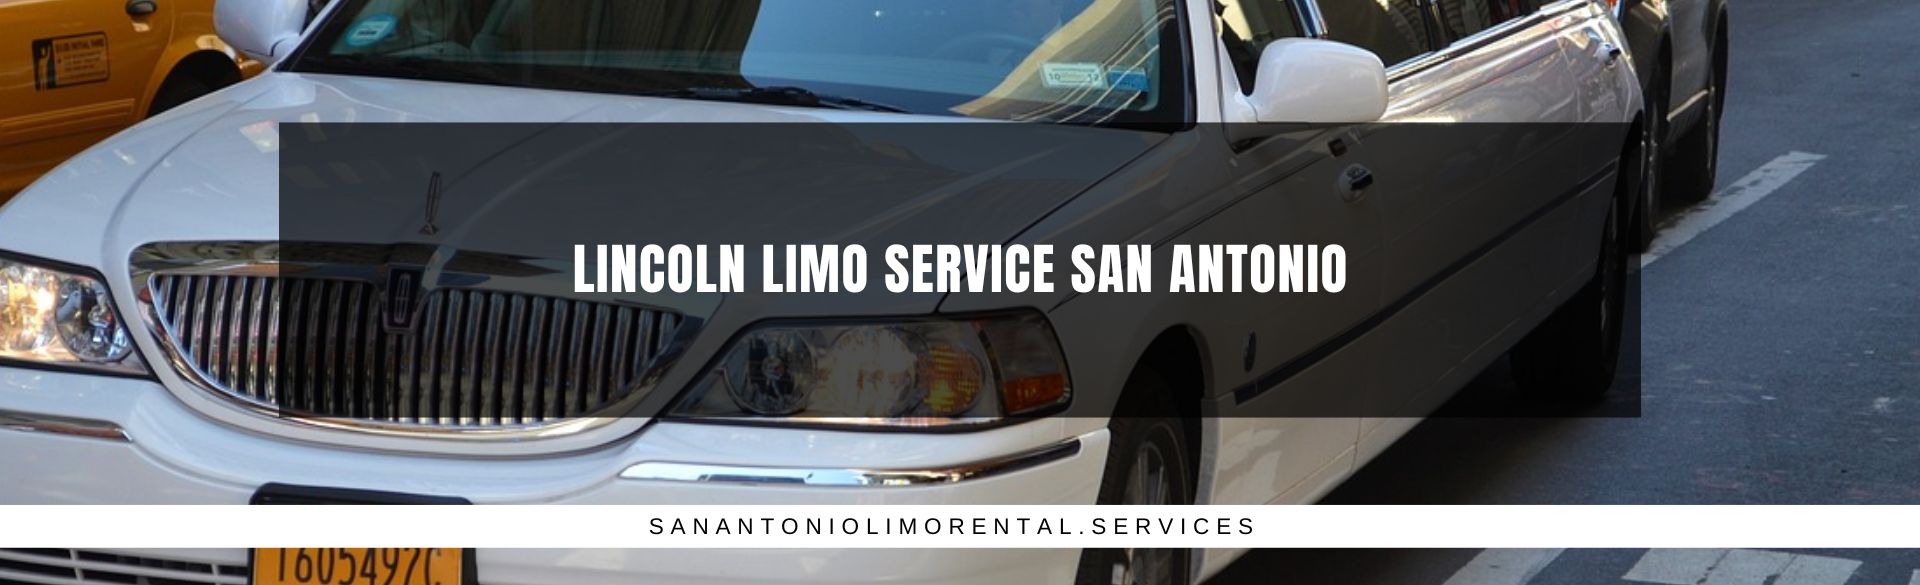 Lincoln Limo Service San Antonio